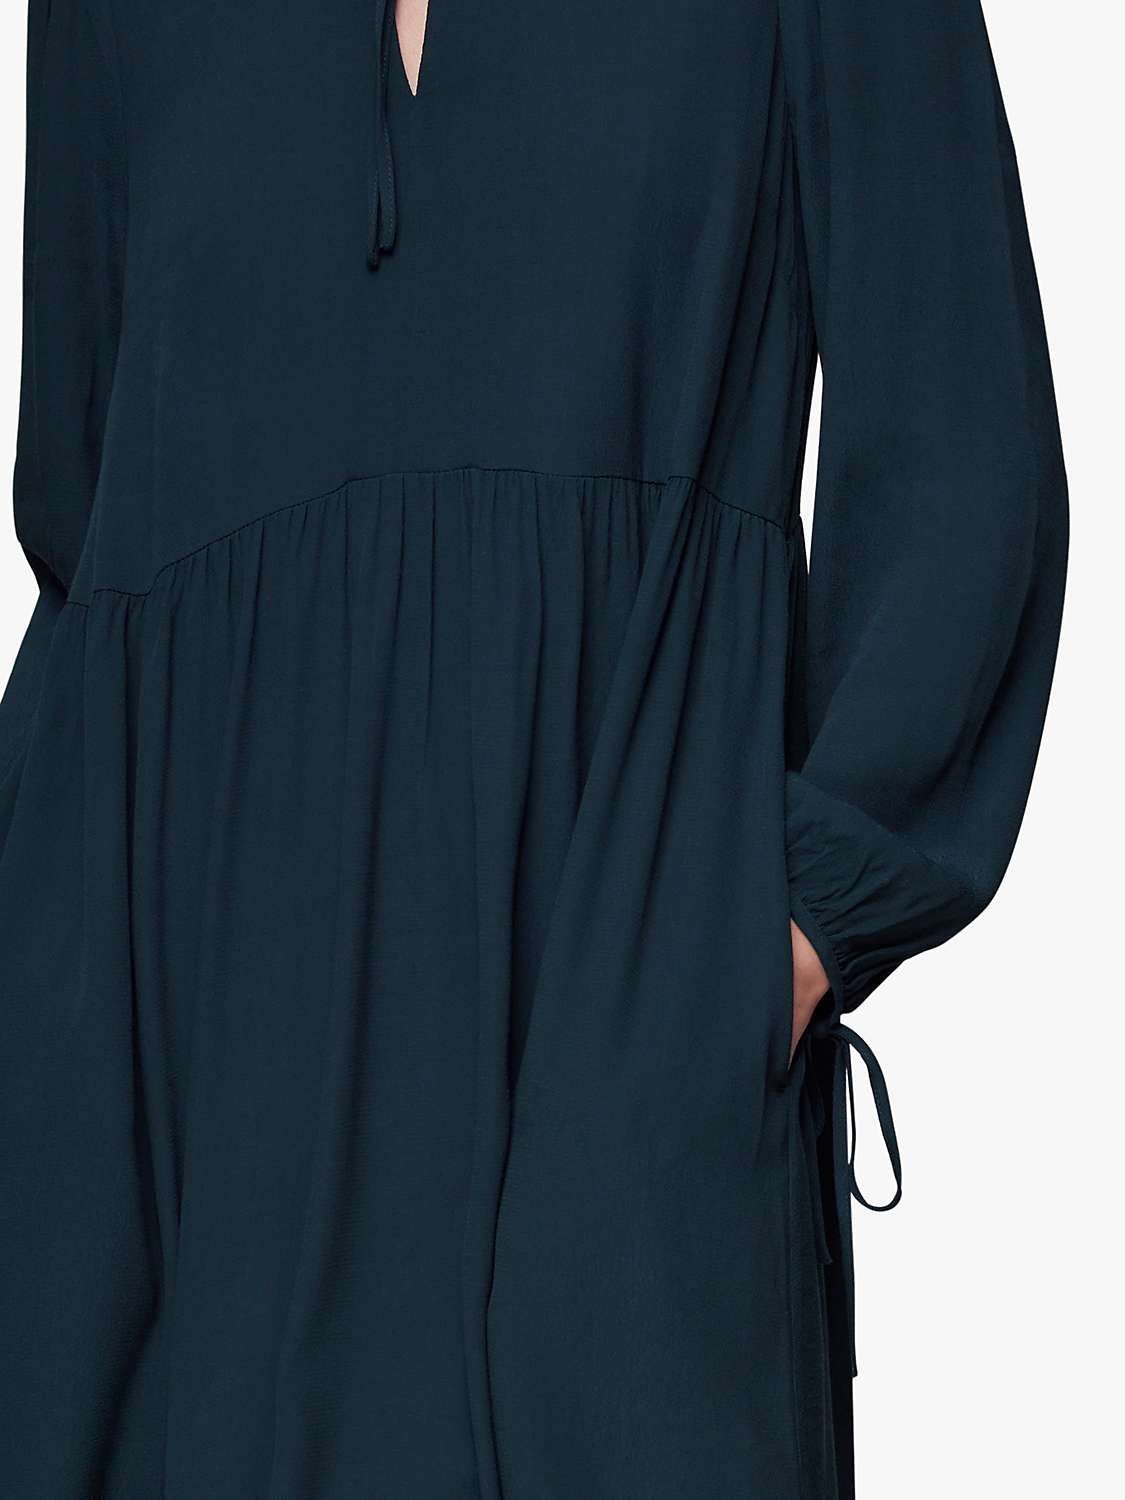 Buy Whistles Lyla Trapeze Midi Dress, Teal Online at johnlewis.com